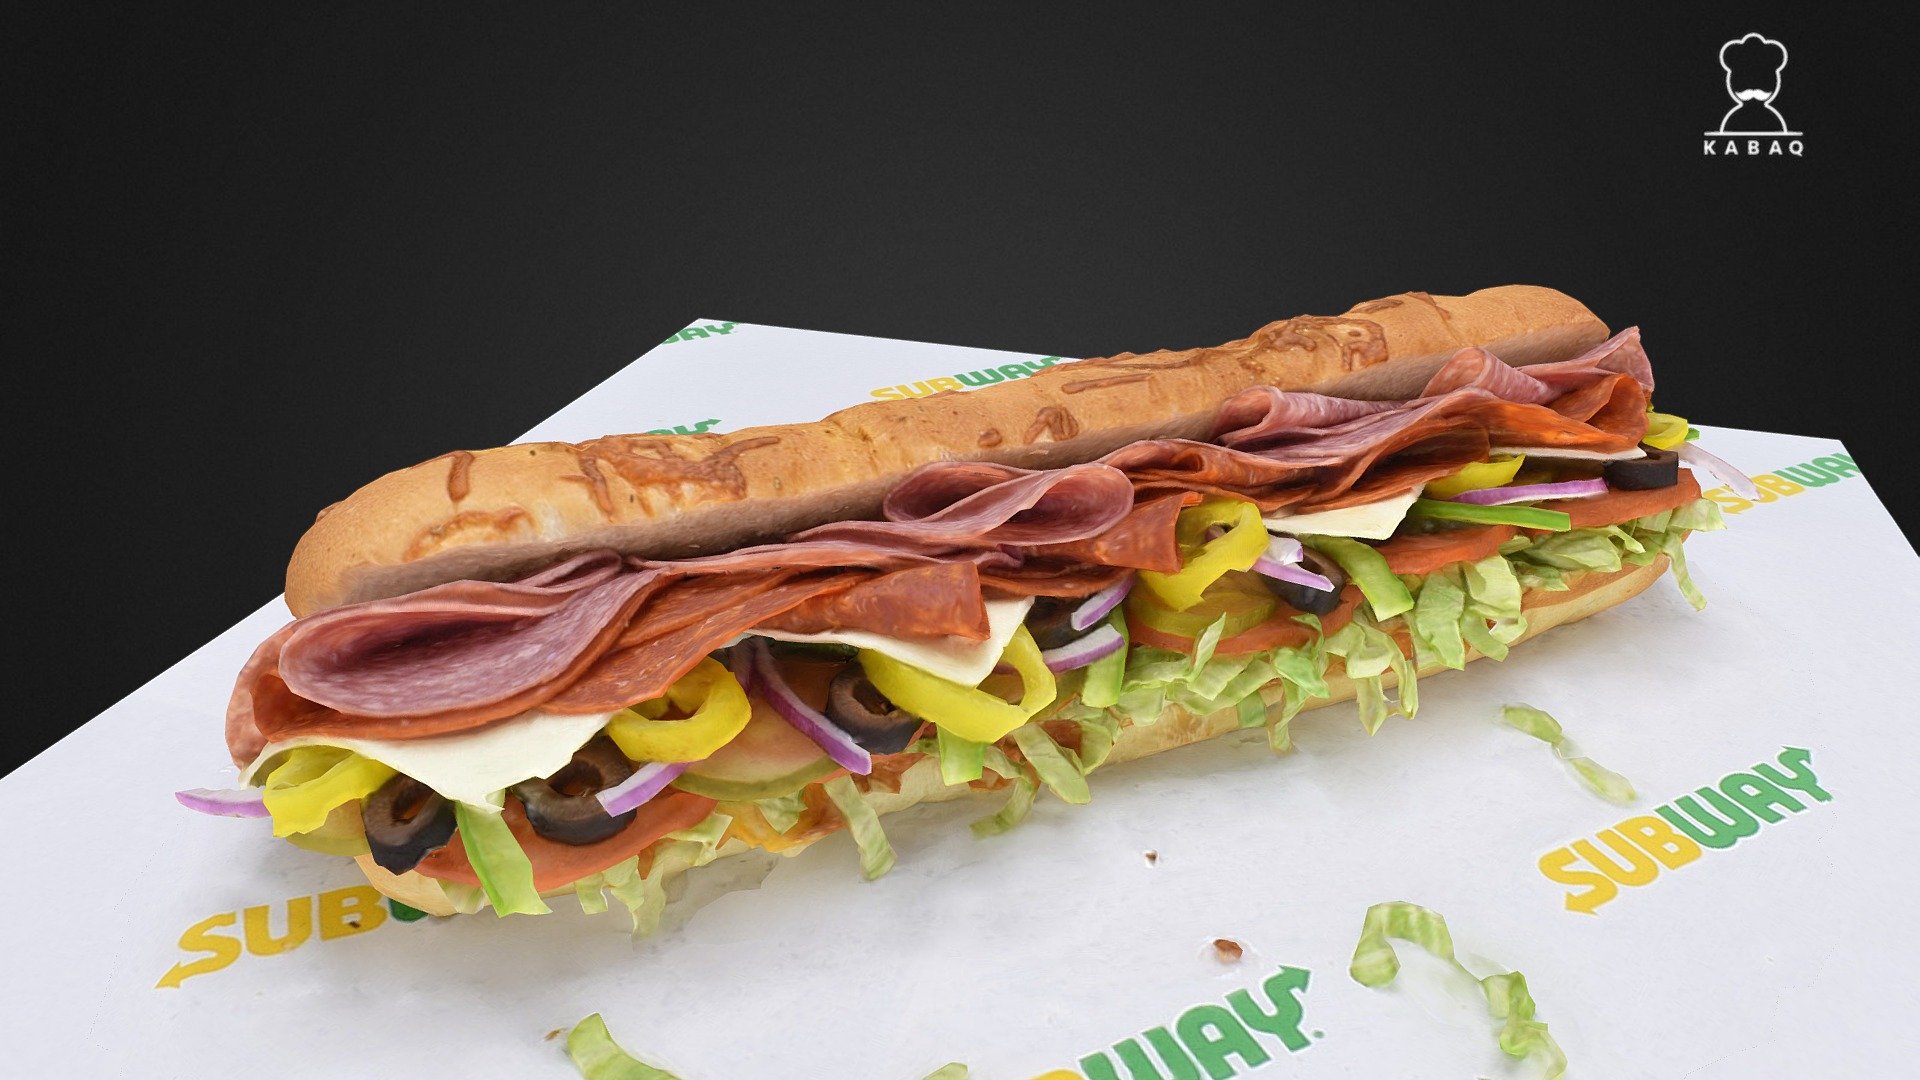 Subway Sandwich - 3D model by QReal Lifelike 3D (@kabaq) 3d model